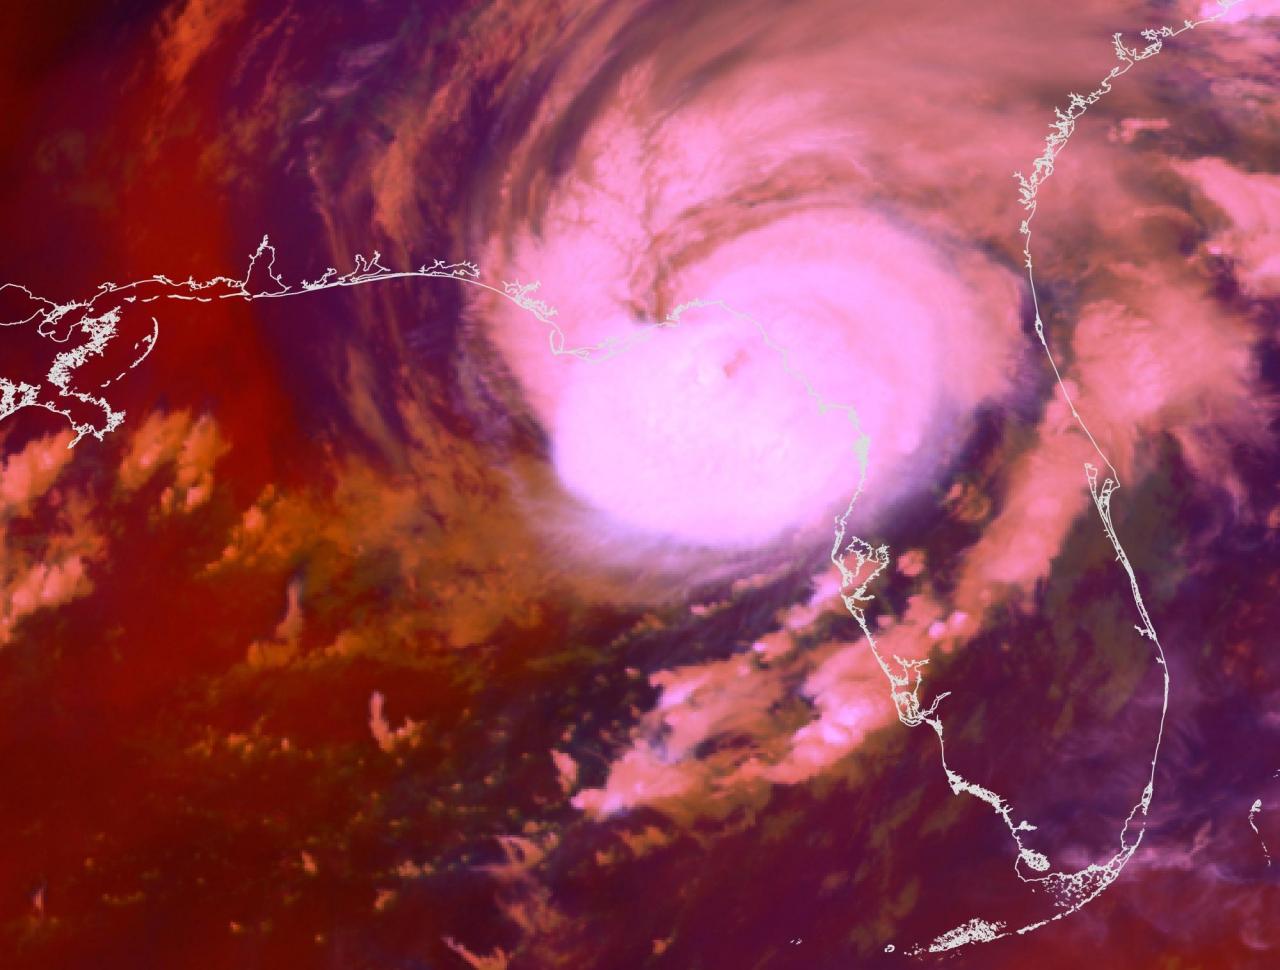 Il landfall dell'uragano Idalia in Florida (Fonte: NOAA's GOES-16 weather sat)